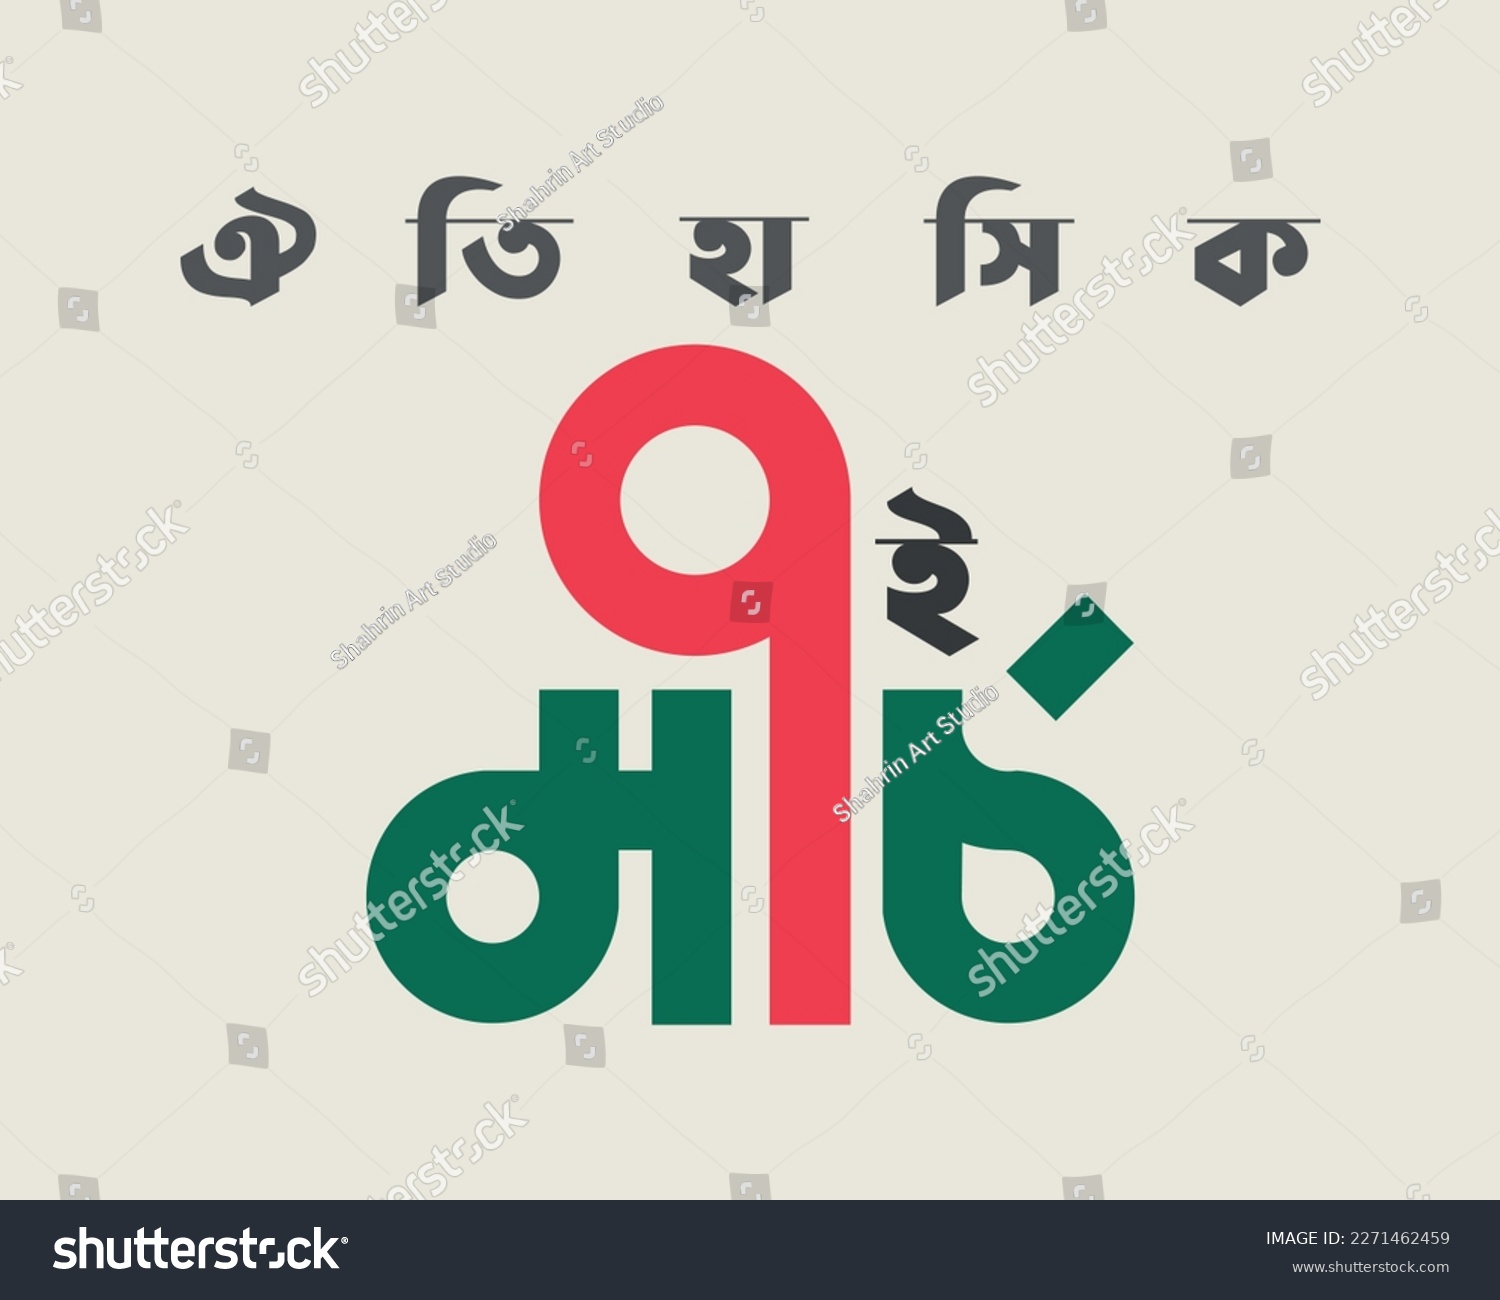 SVG of 7 March Bangla Typography. (Oitihasik 7 March ) Translation: The Historic 7th March Speech of Bangabandhu. Flat vector illustration design. svg